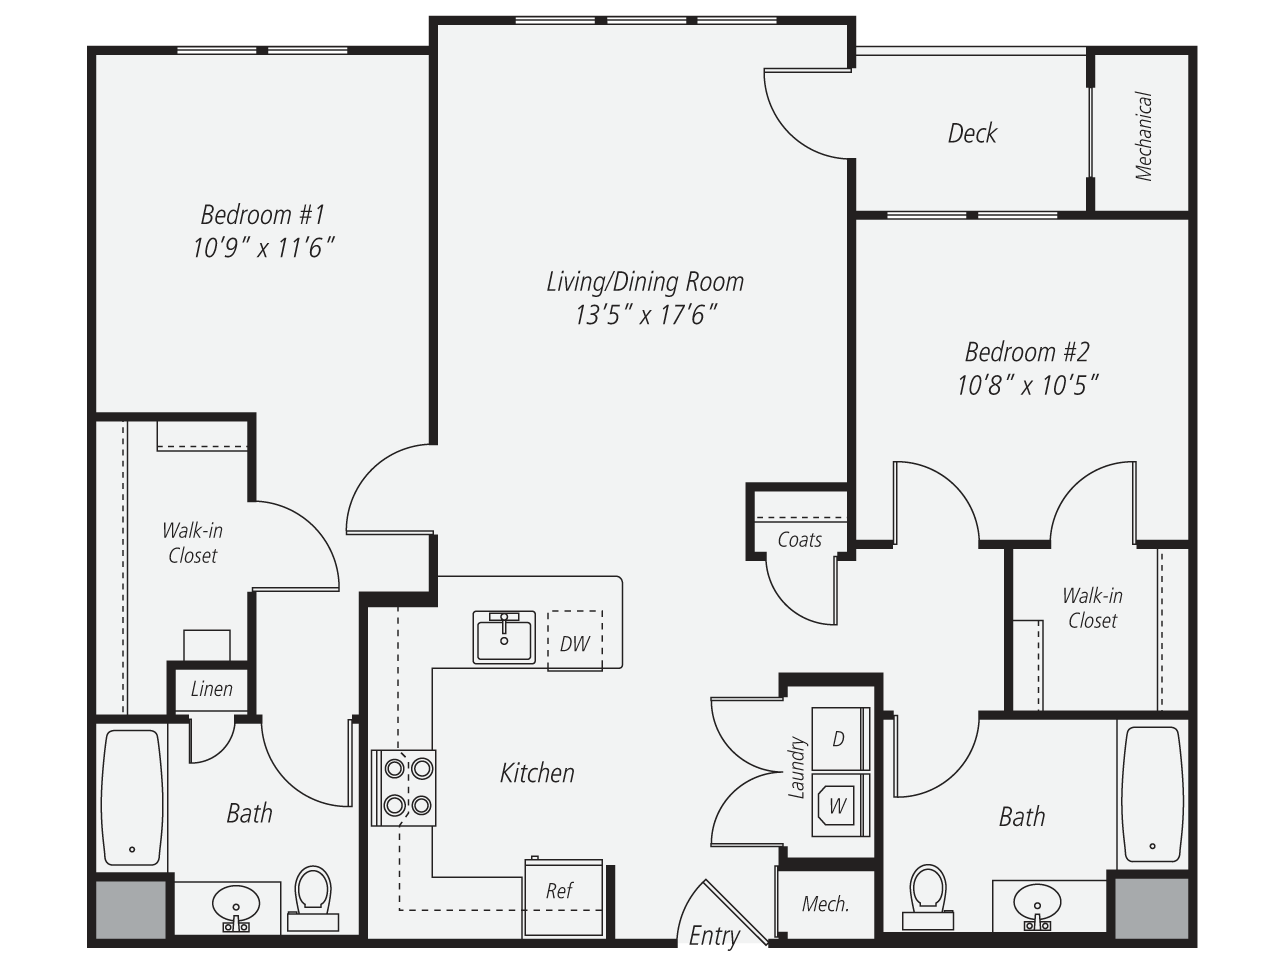 Floorplan for Apartment #362, 2 bedroom unit at Halstead Norwalk